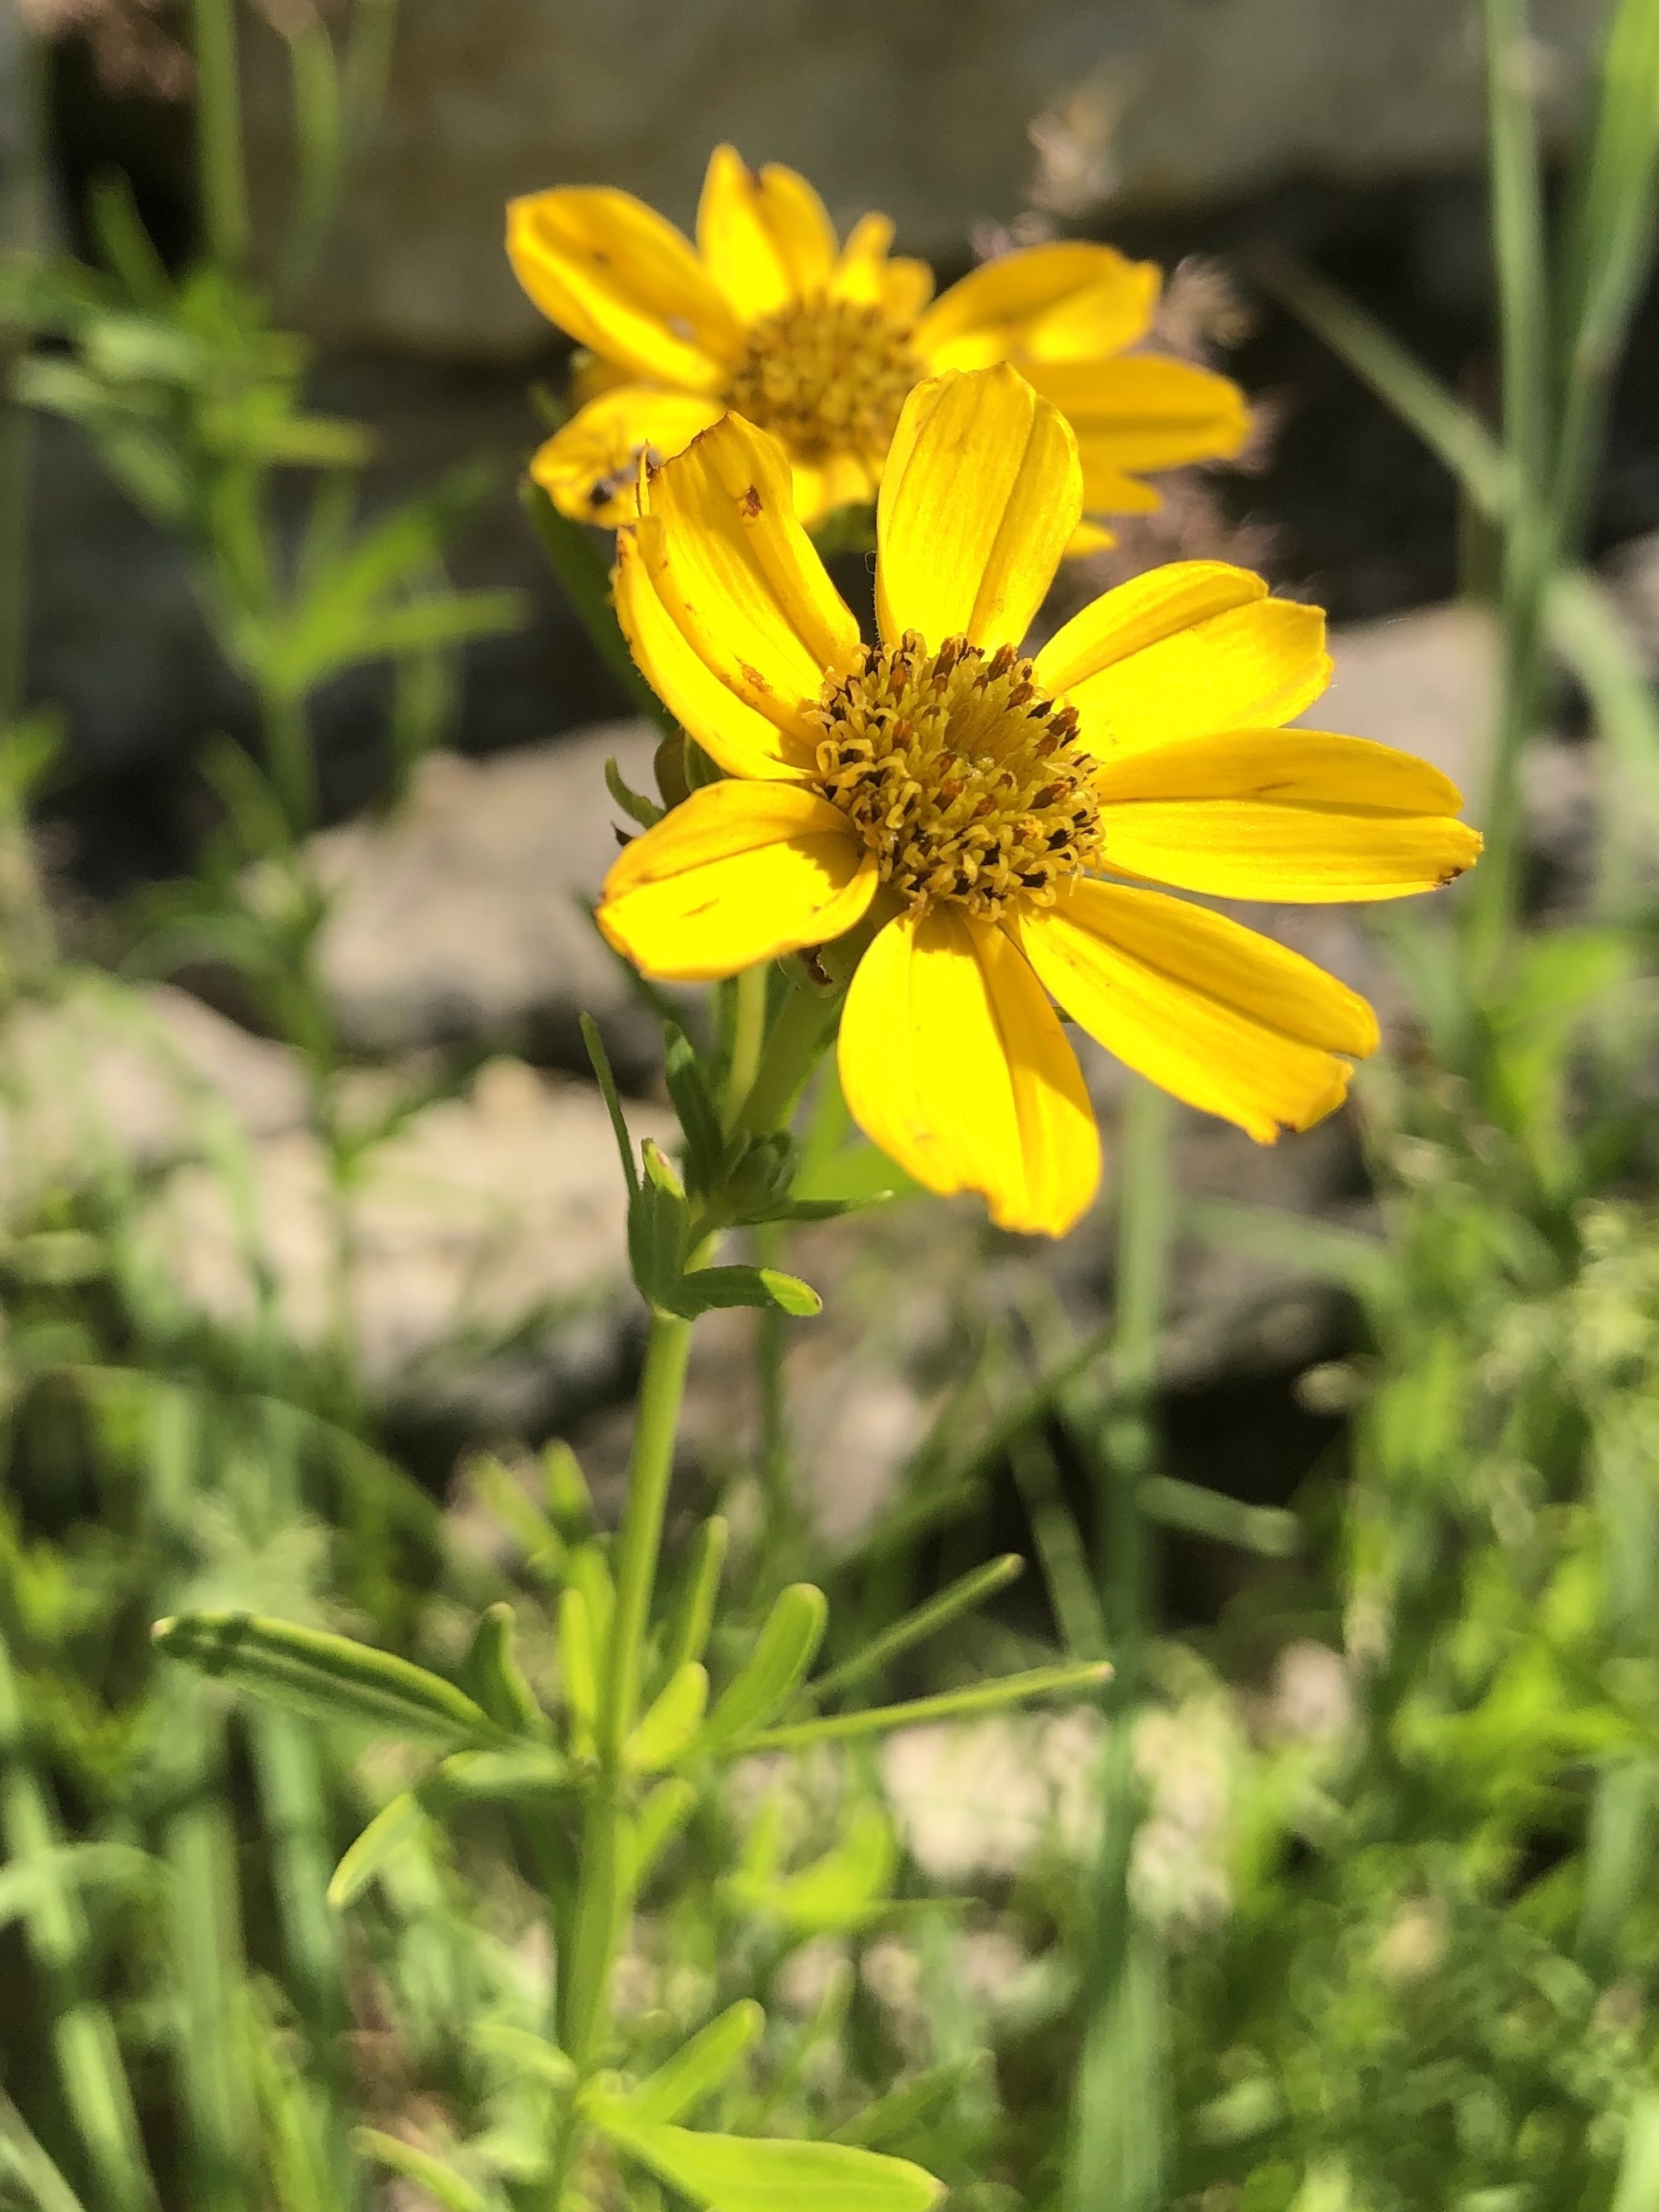 Prairie Coreopsis in UW Arboretum near Visitors Center in Madison, Wisconsin on June 18, 2021.